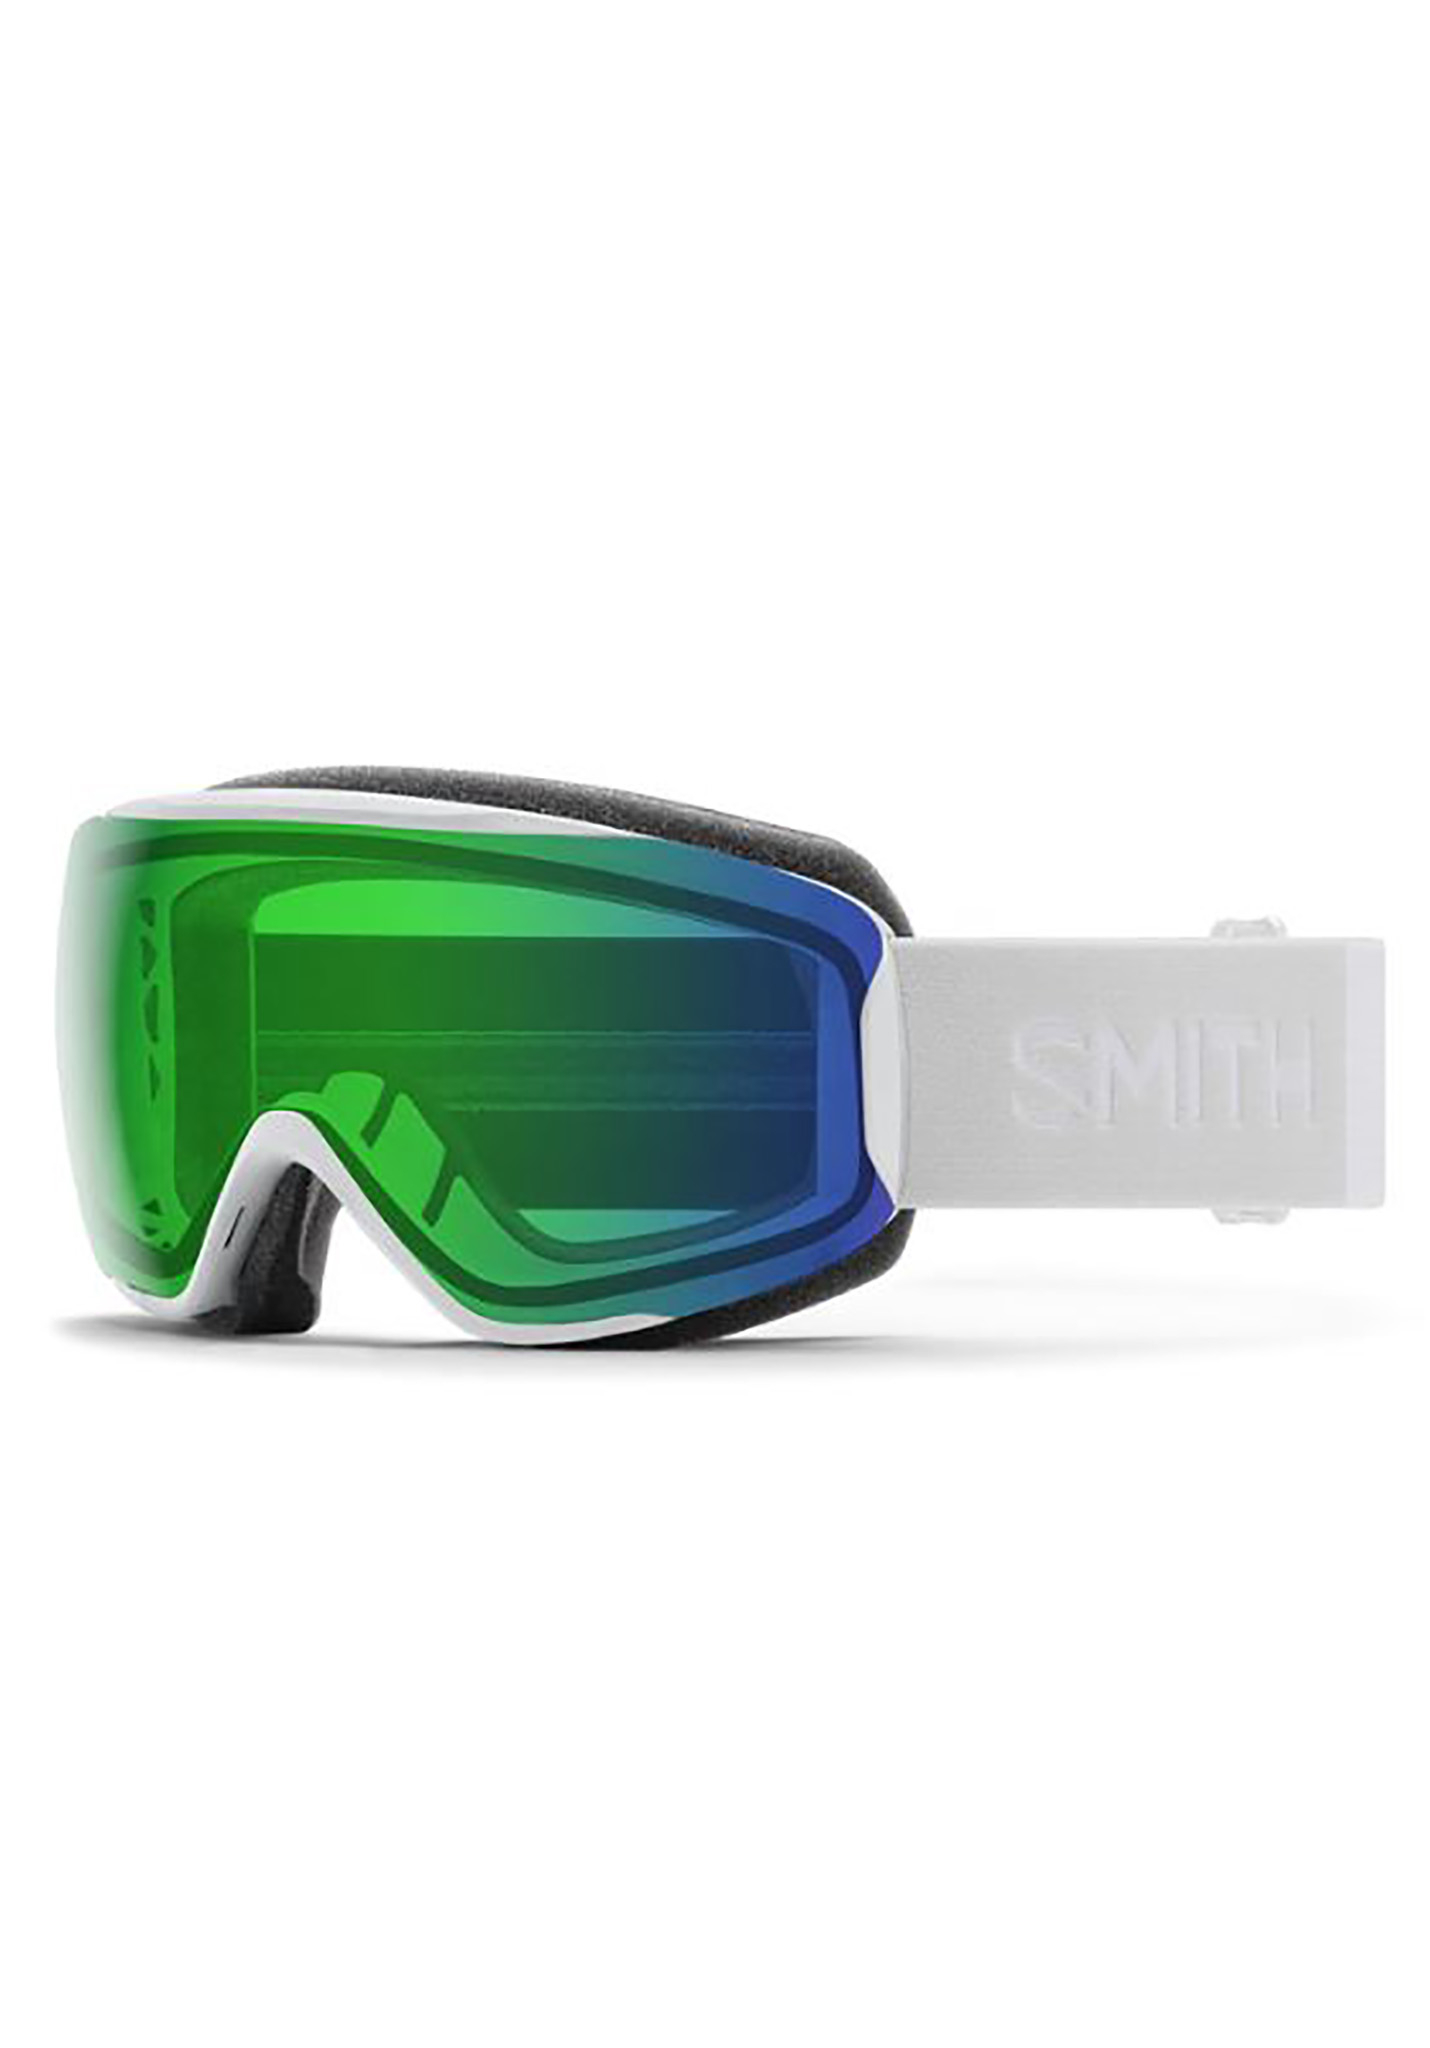 Smith Moment Snowboardbrillen grün/blau One Size